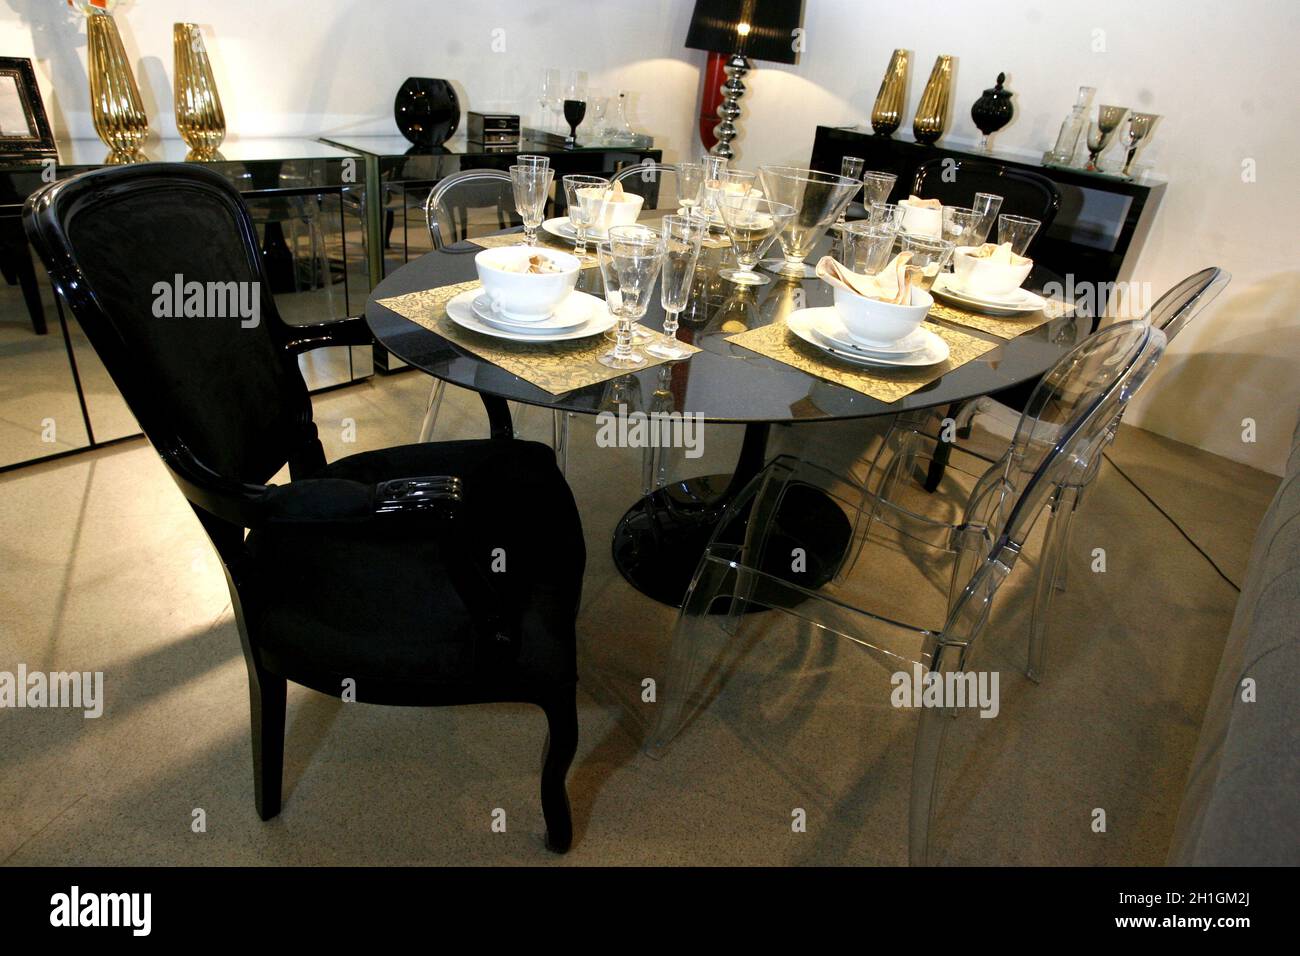 salvador, bahia / brazil - april 1, 2015: Dining room with Tulipe tables, Luiz XV chair and transparent acrylic chair by Ero Saarinen design is seen i Stock Photo